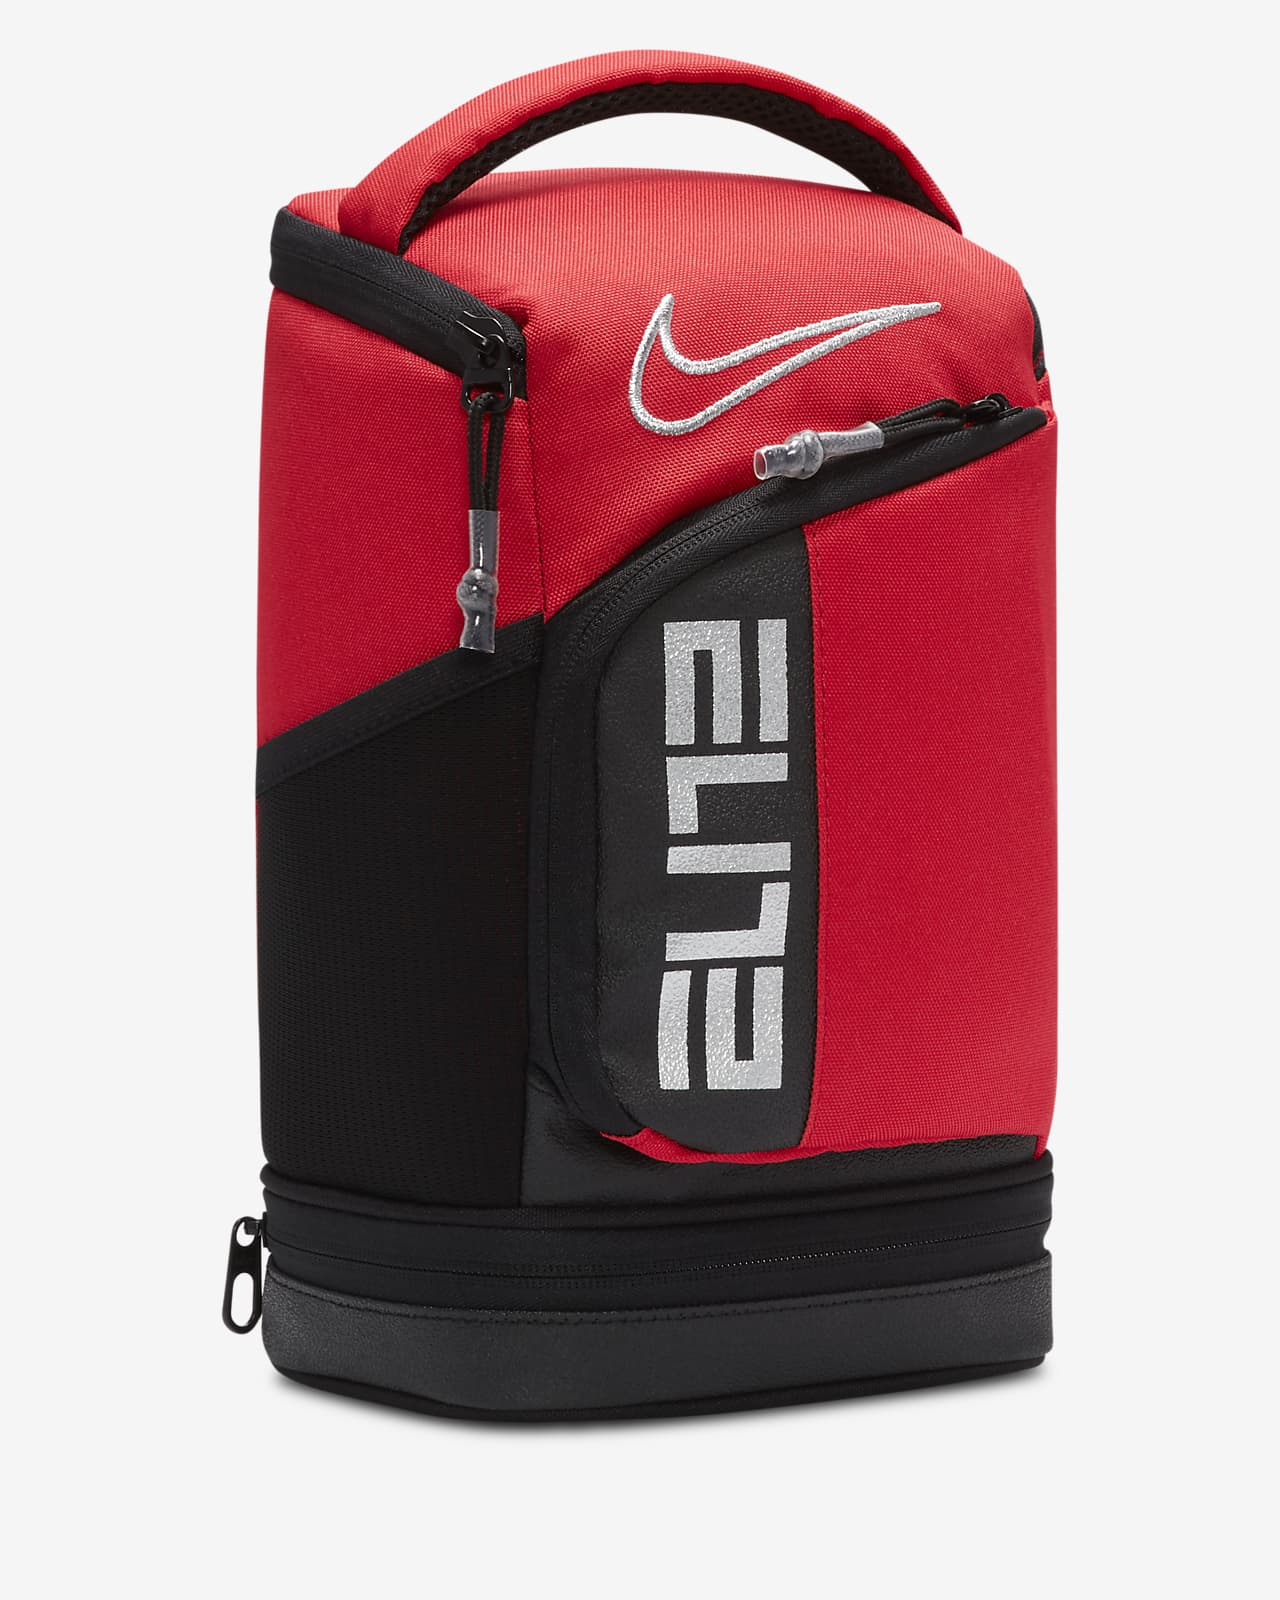 Nike Fuel Pack Lunch Bag - Coconut Milk